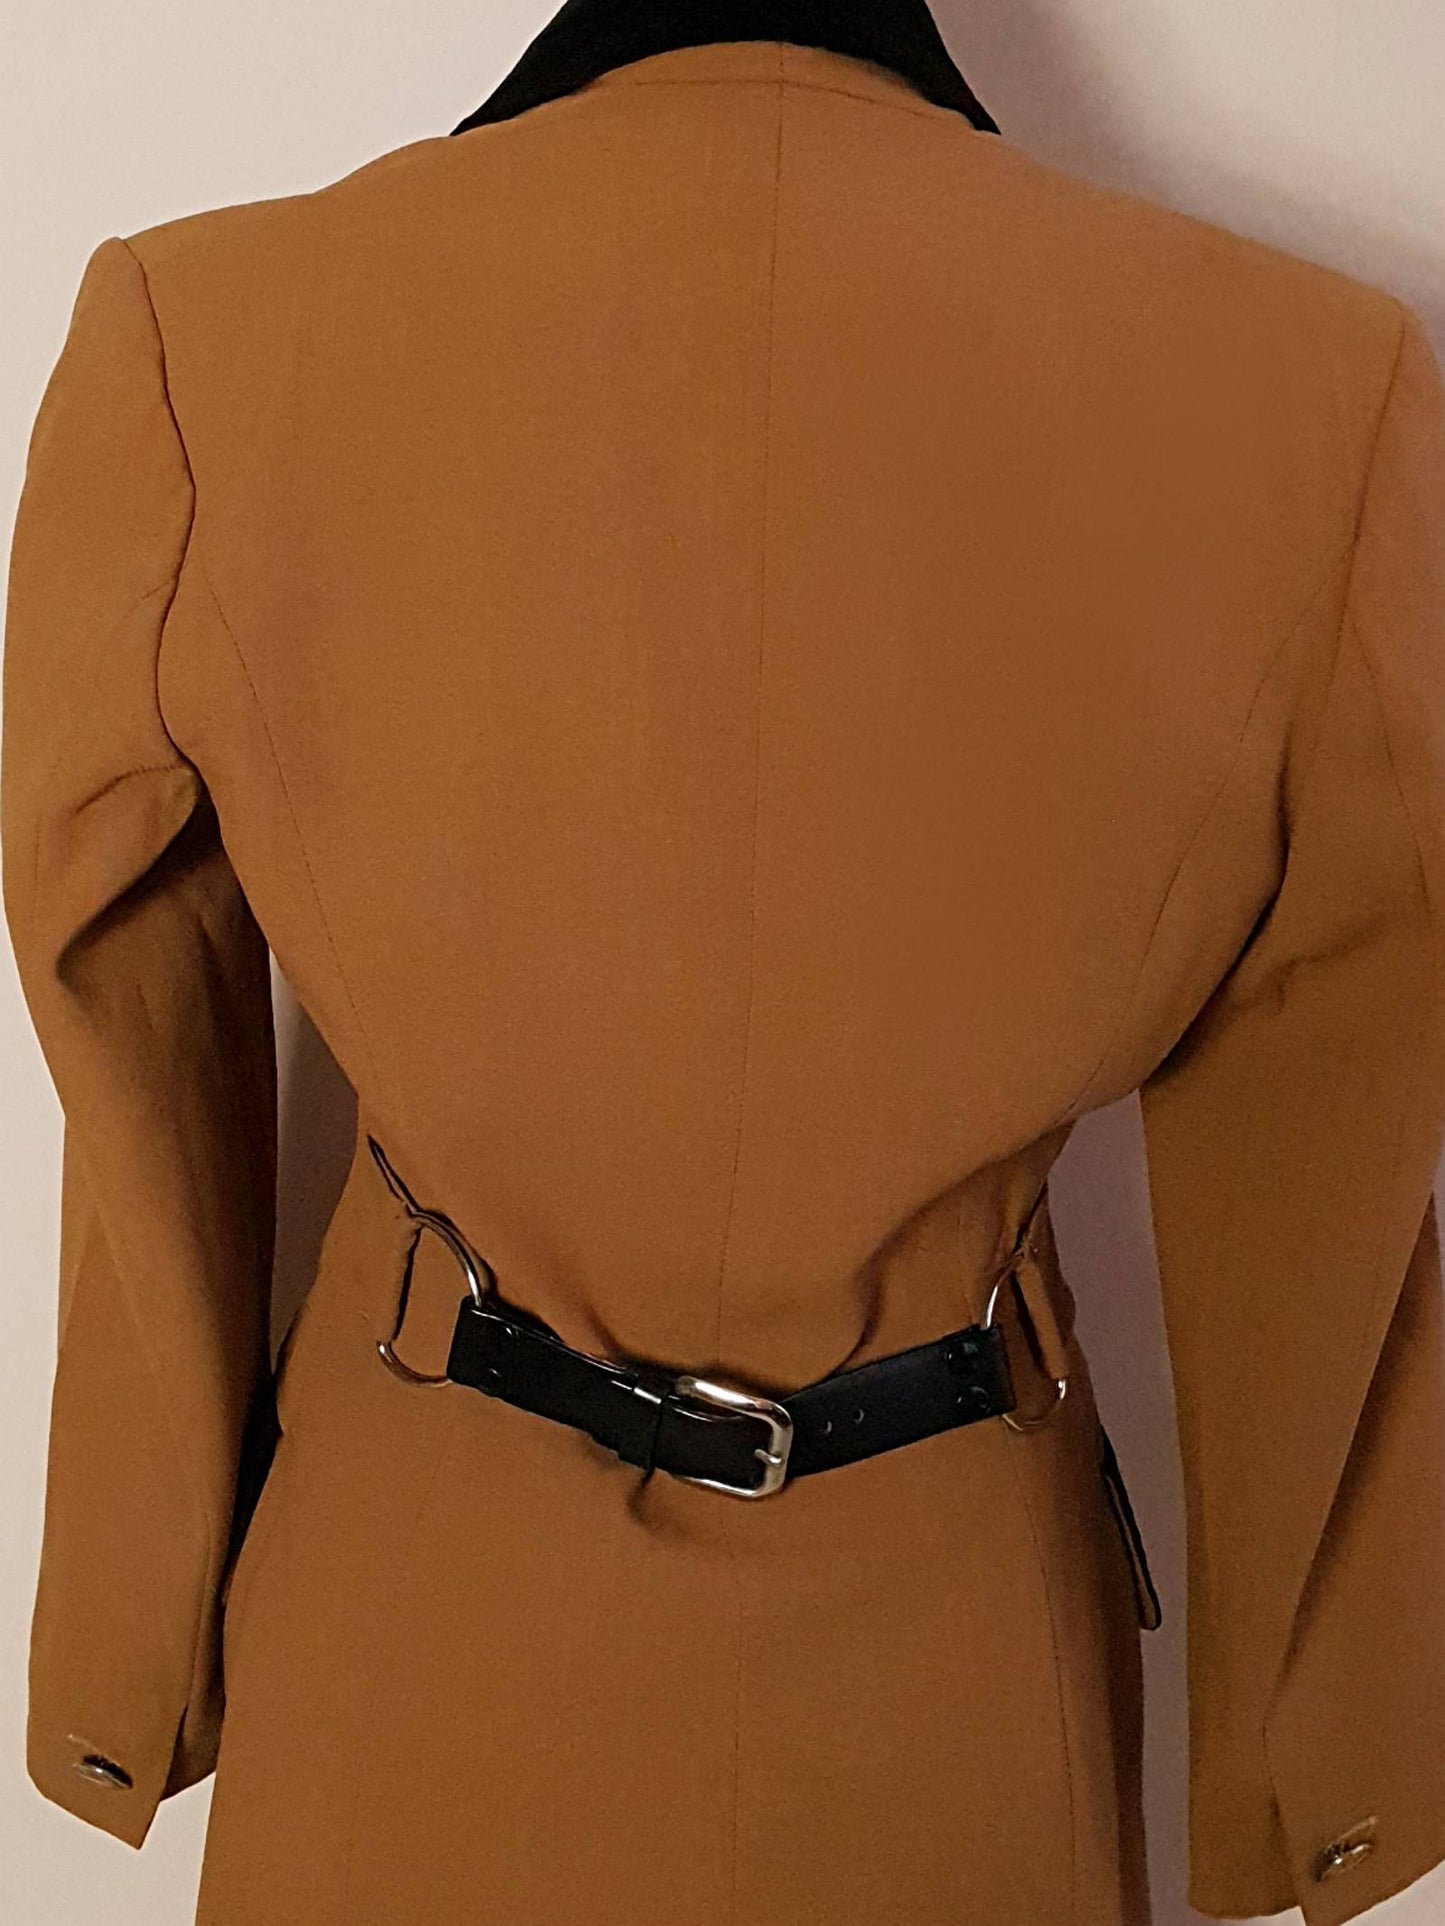 1980s Vintage Arabella Pollen Camel Brown Wool Jacket Blazer- Size 10